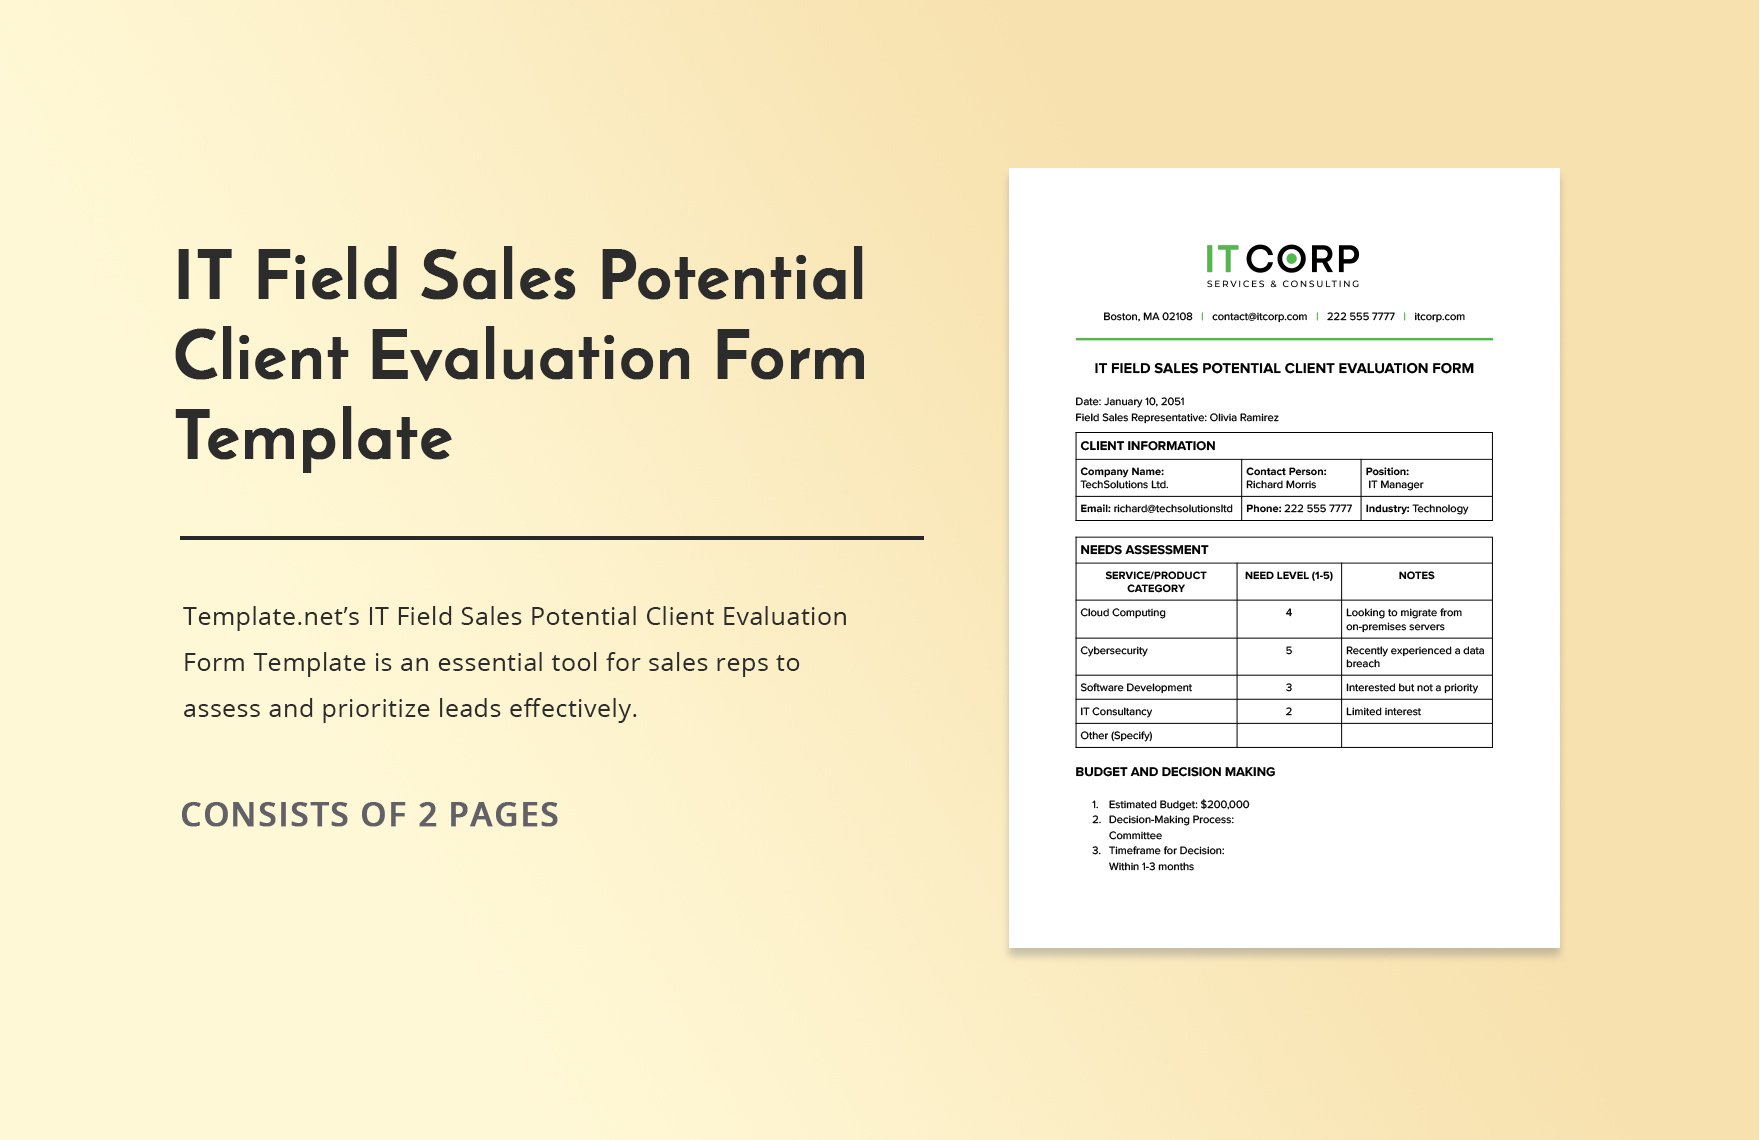 IT Field Sales Potential Client Evaluation Form Template